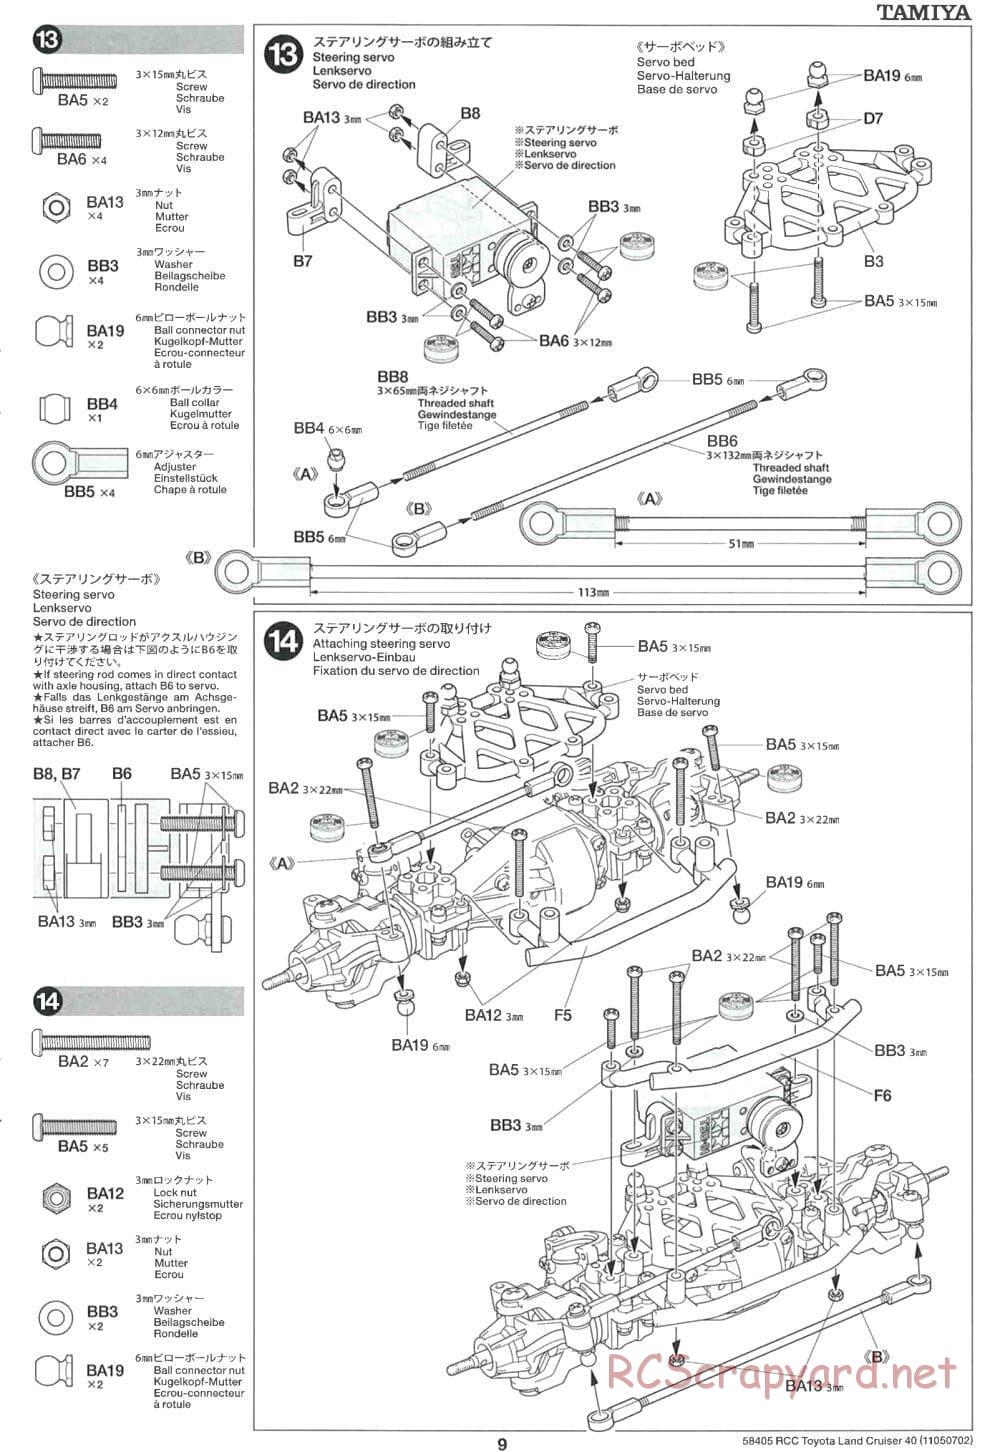 Tamiya - Toyota Land Cruiser 40 - CR-01 Chassis - Manual - Page 9